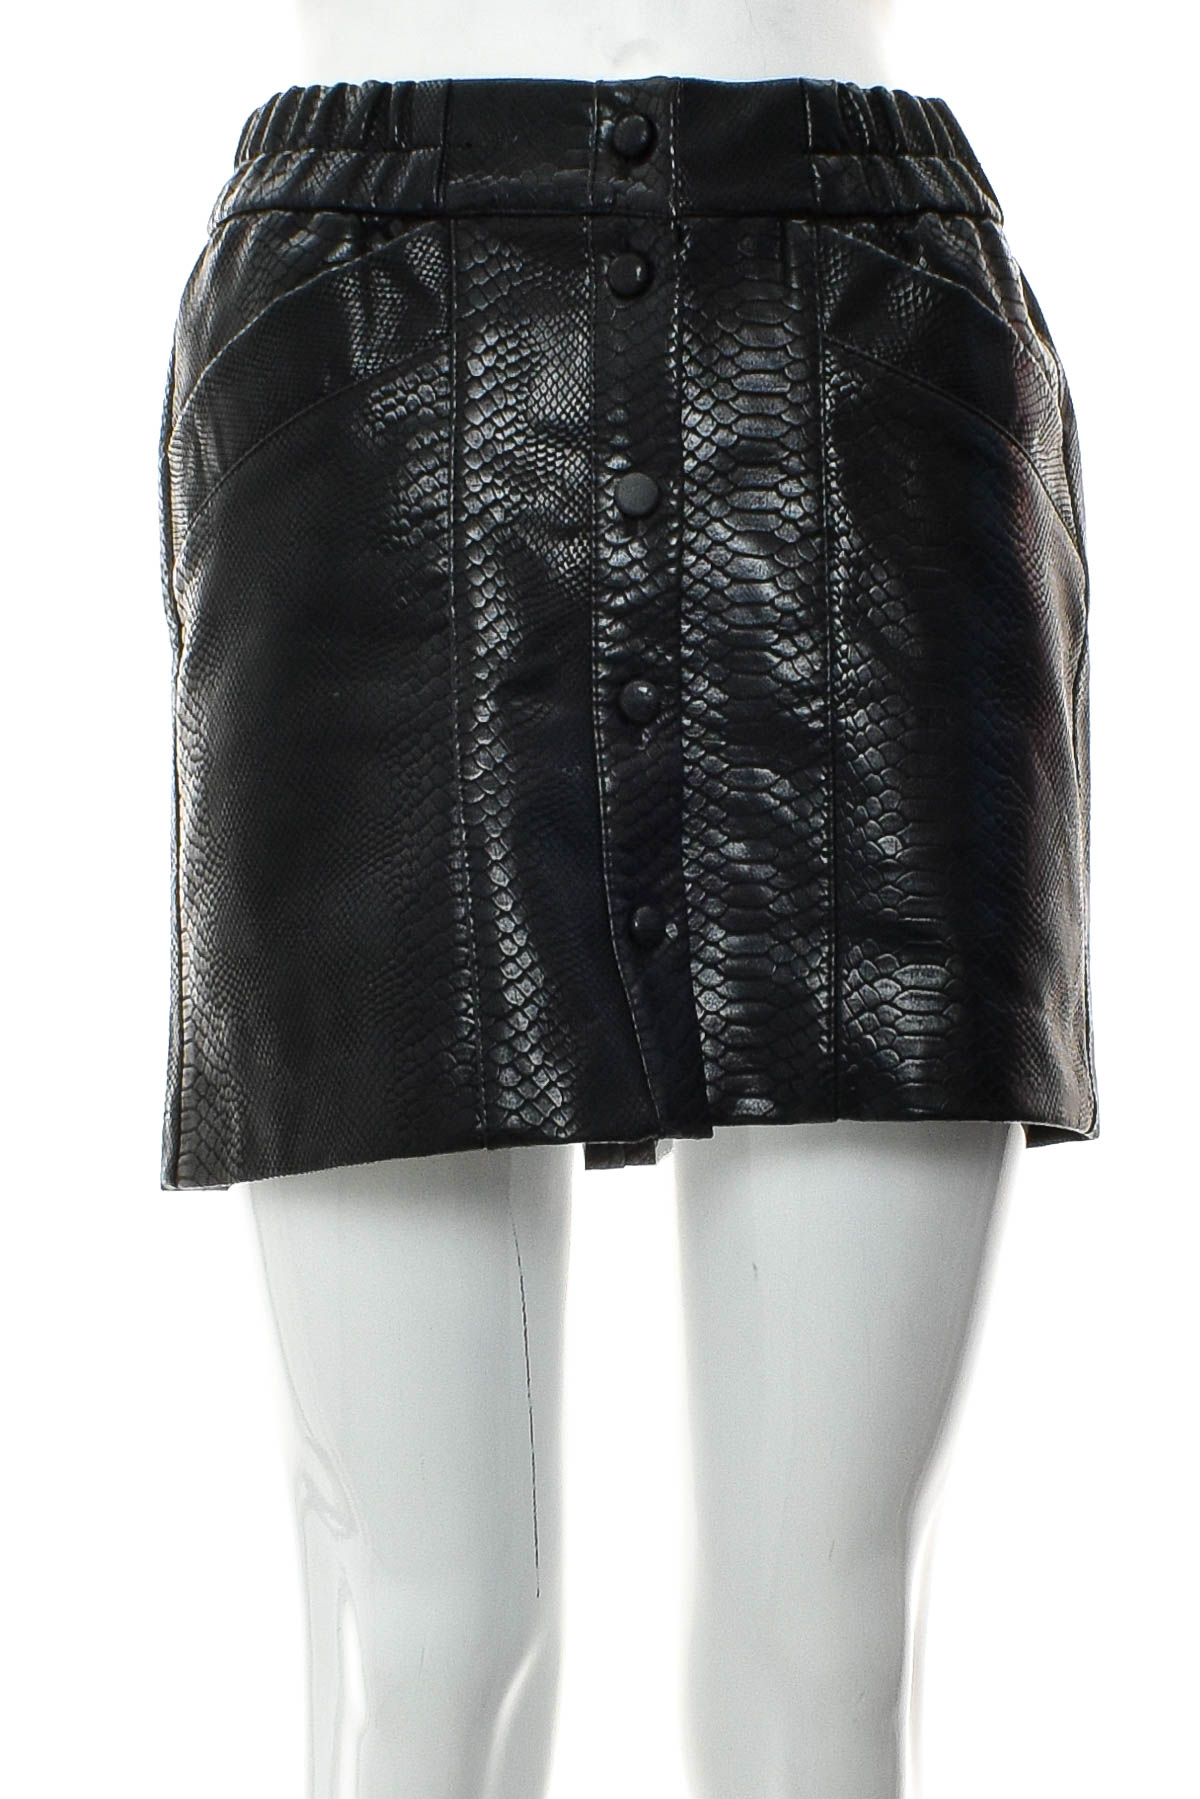 Leather skirt - Bershka - 0